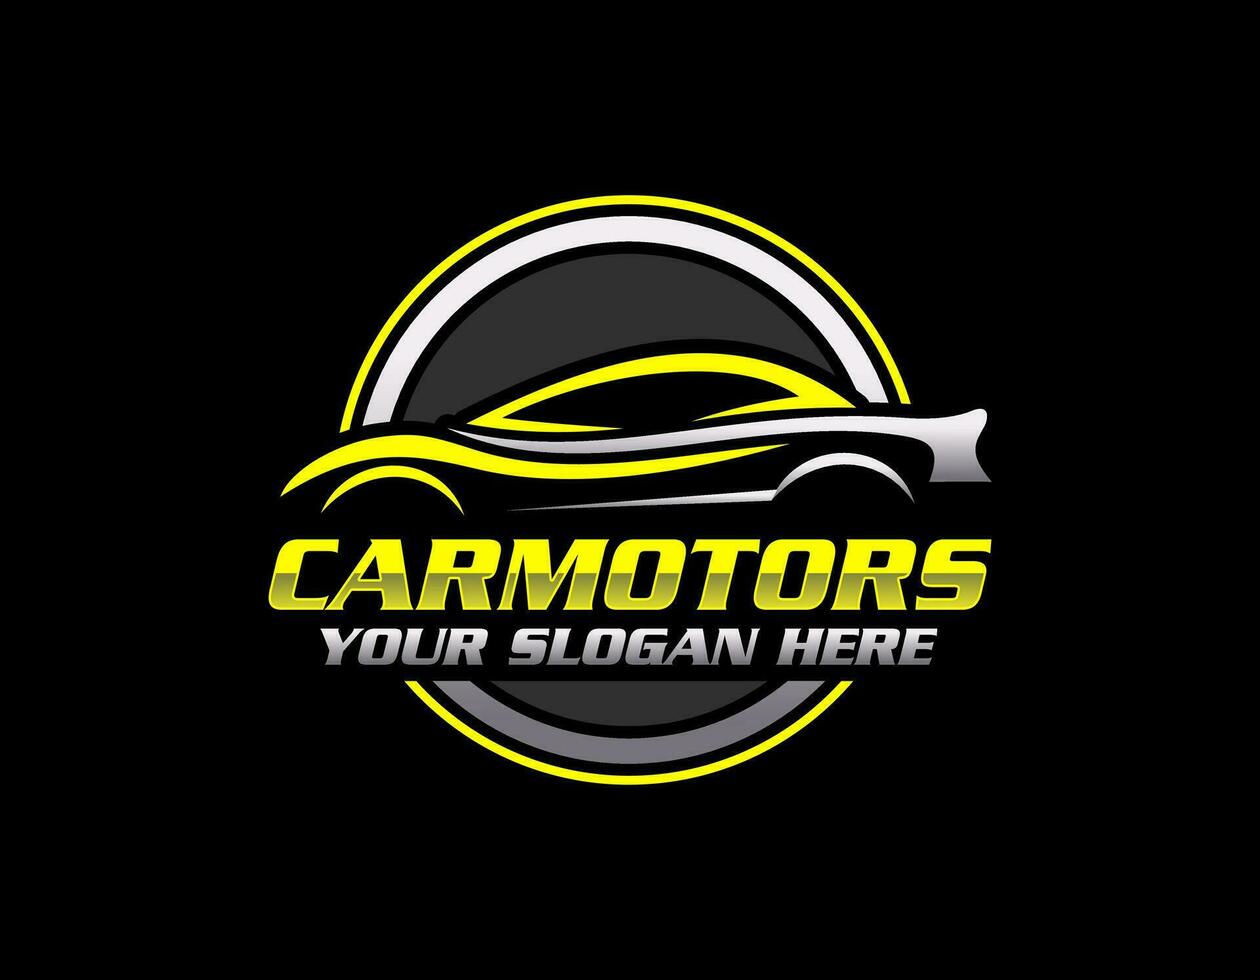 vector illustration car rental logo template, emblem, badges isolated on black background, dark logo with attractive color gradient.